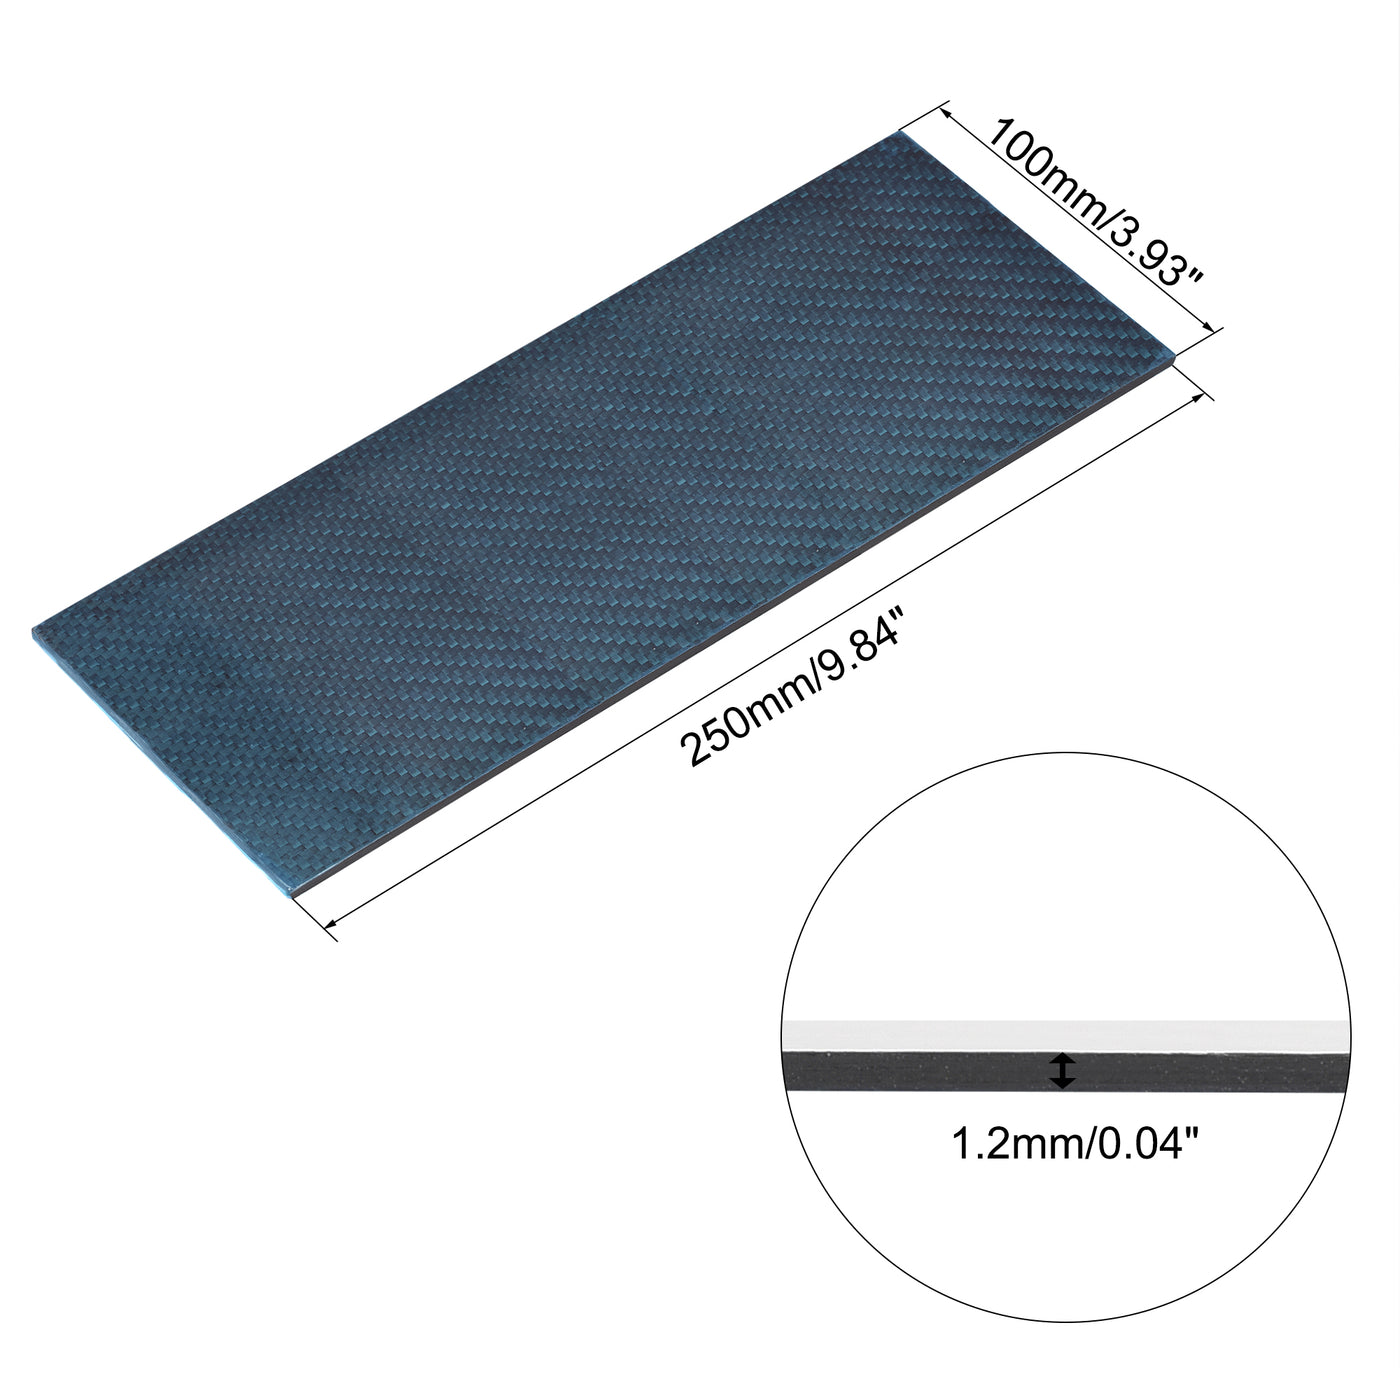 Uxcell Uxcell Carbon Fiber Plate Panel Sheets 150mm x 125mm x 3mm (Twill Matte)